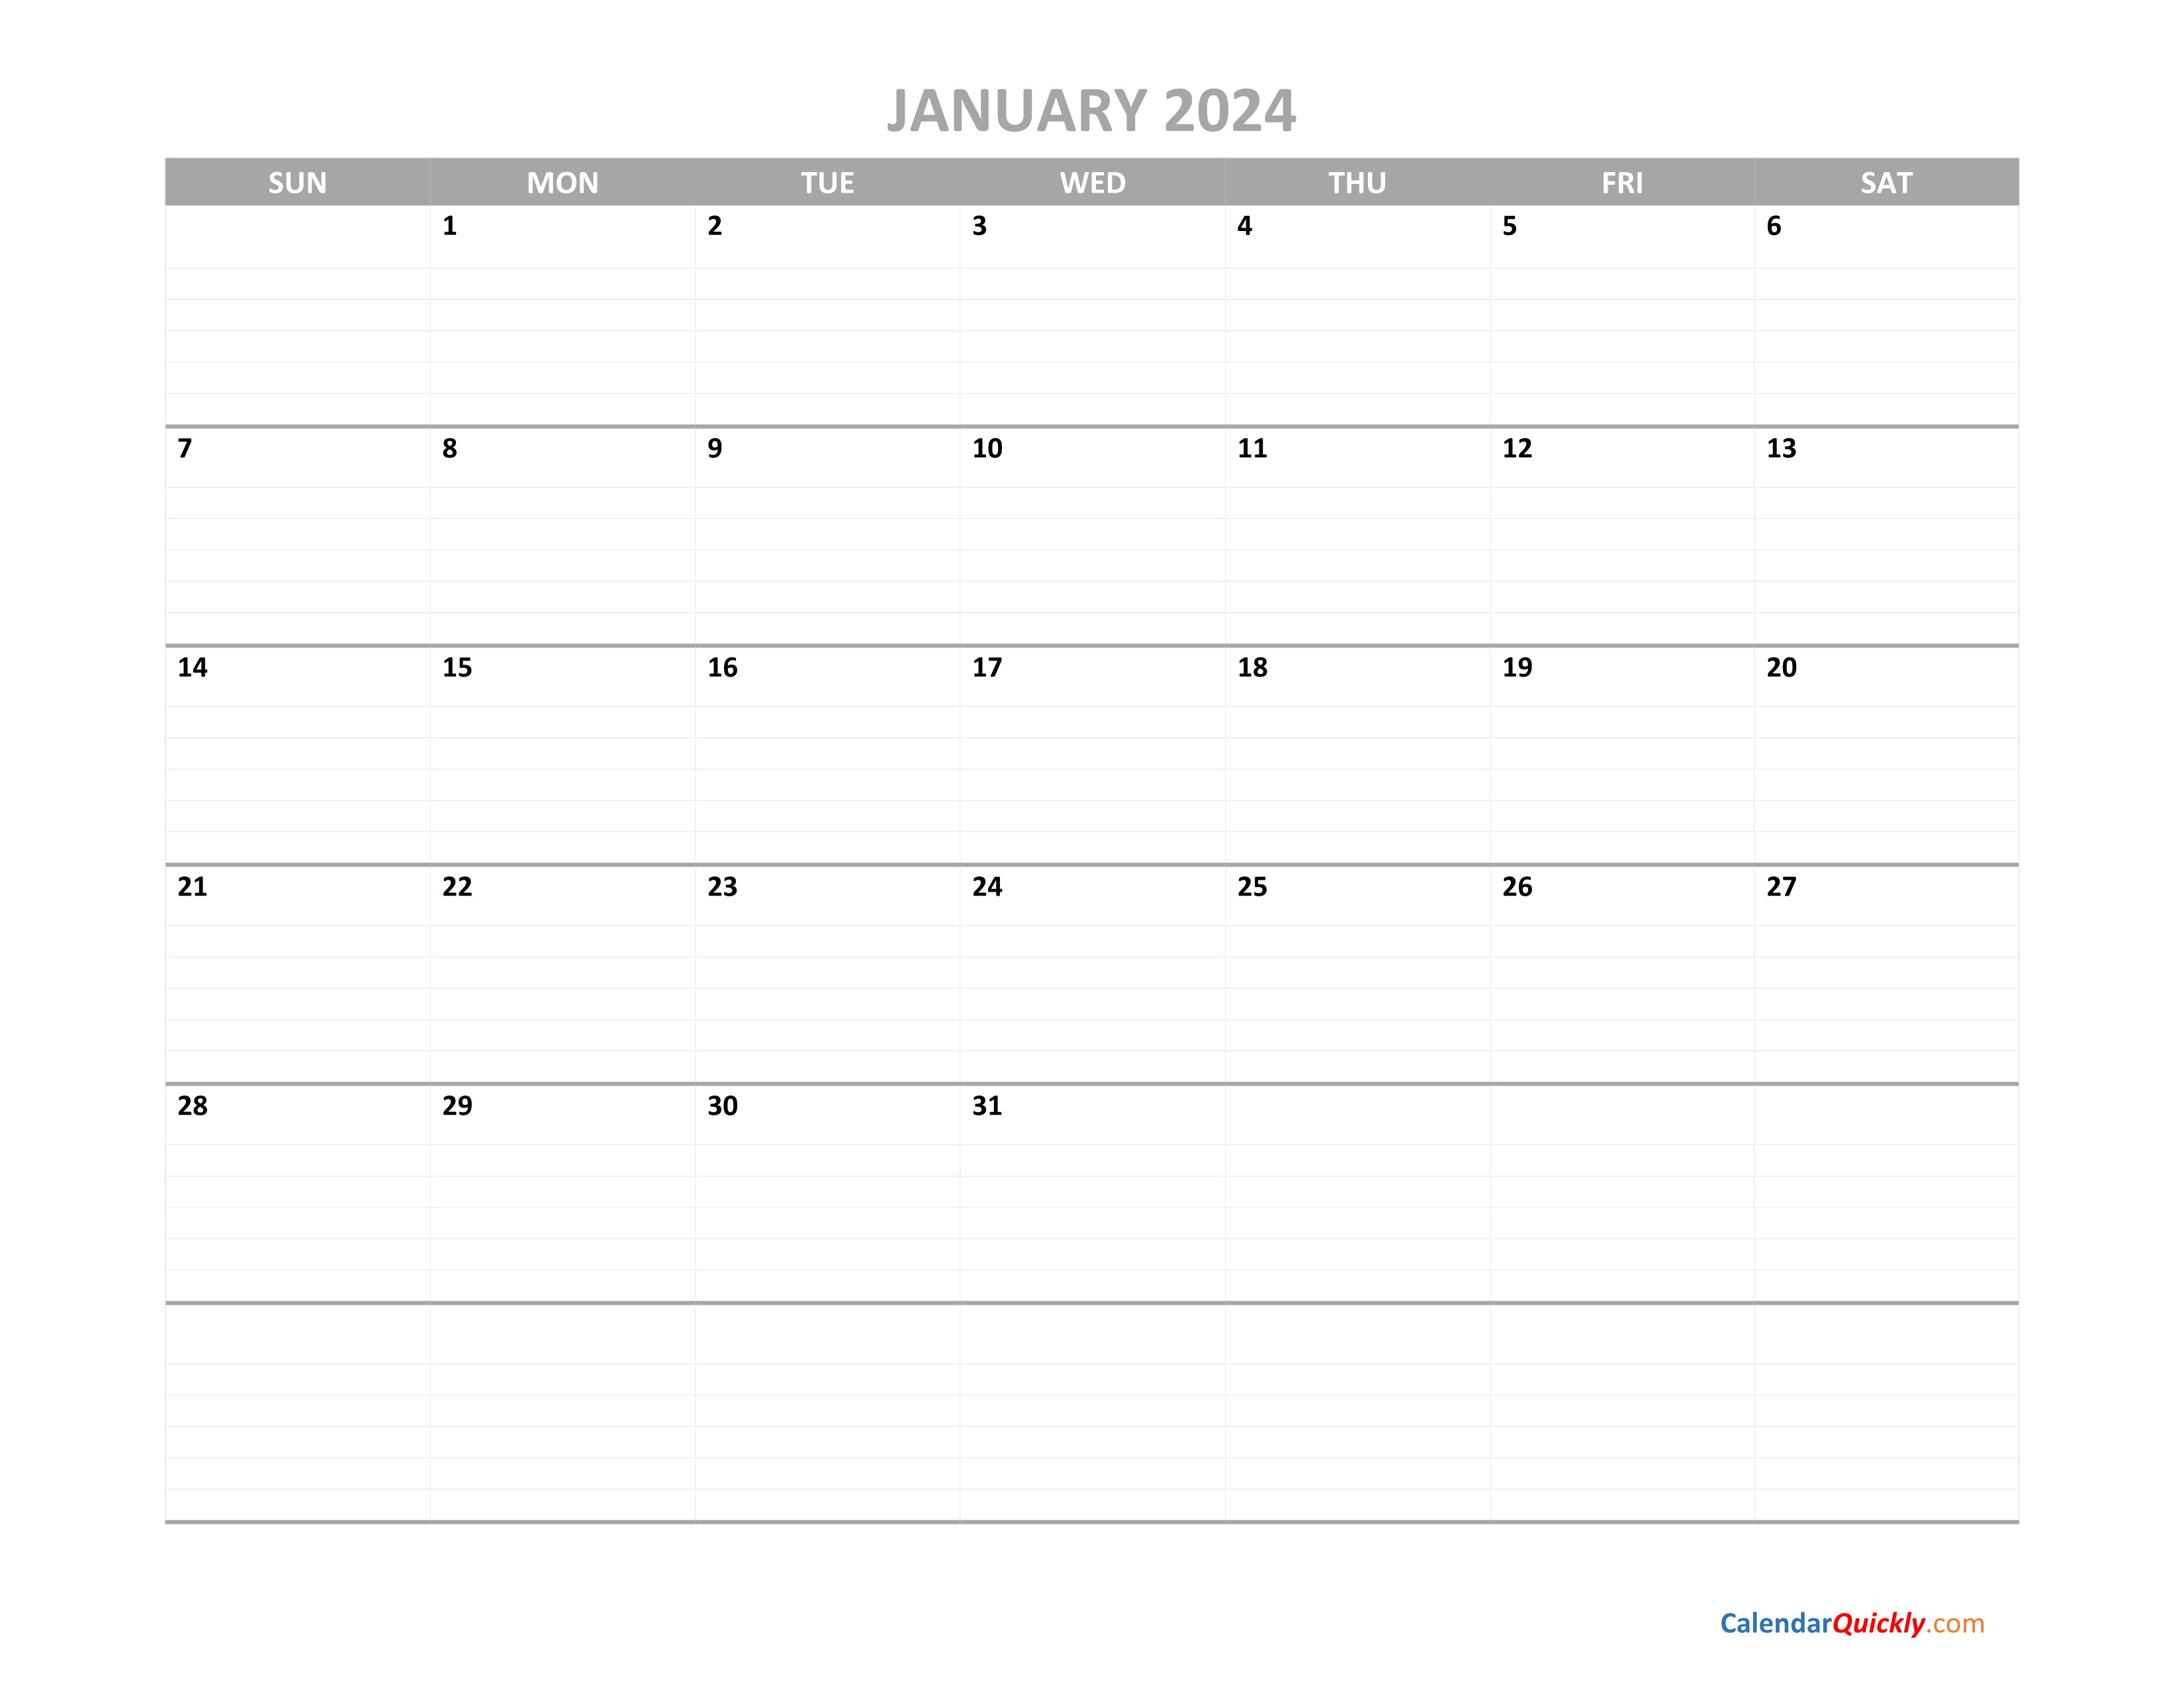 January 2024 Calendars Calendar Quickly Gambaran